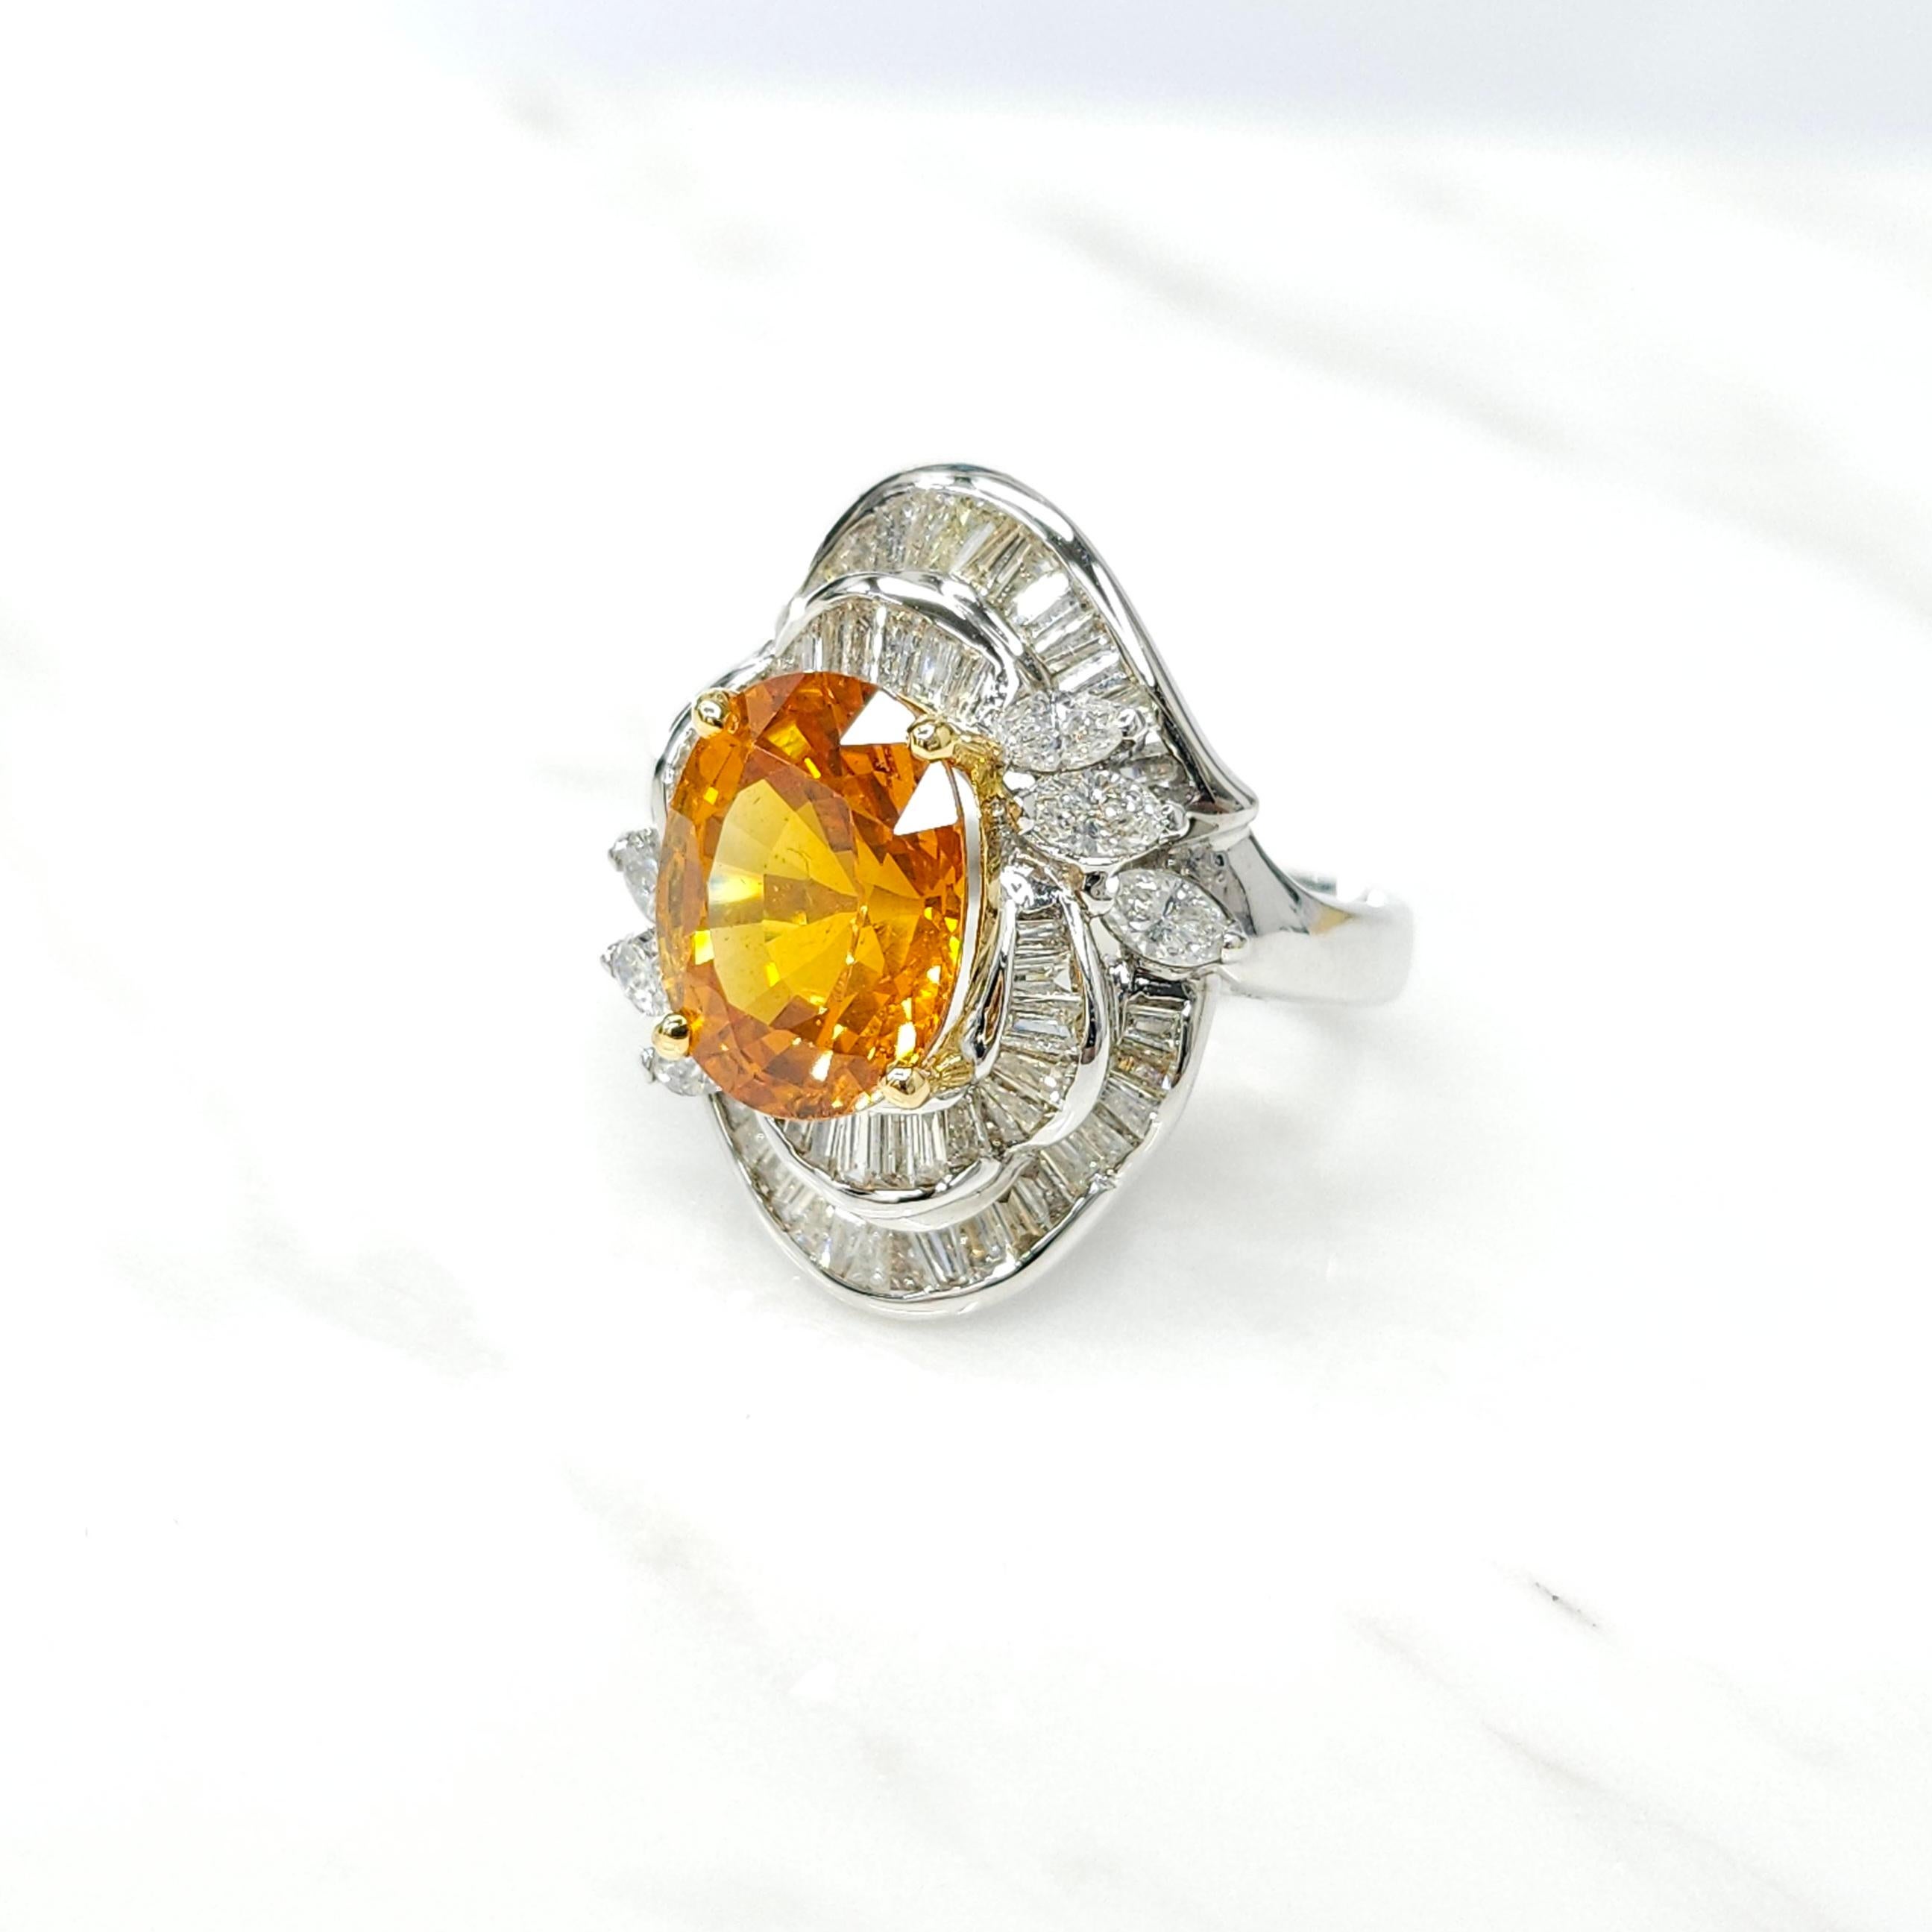 Oval Cut IGI Certified 6.08Carat Ceylon Orange Sapphire & Diamond Ring in 18K White Gold For Sale